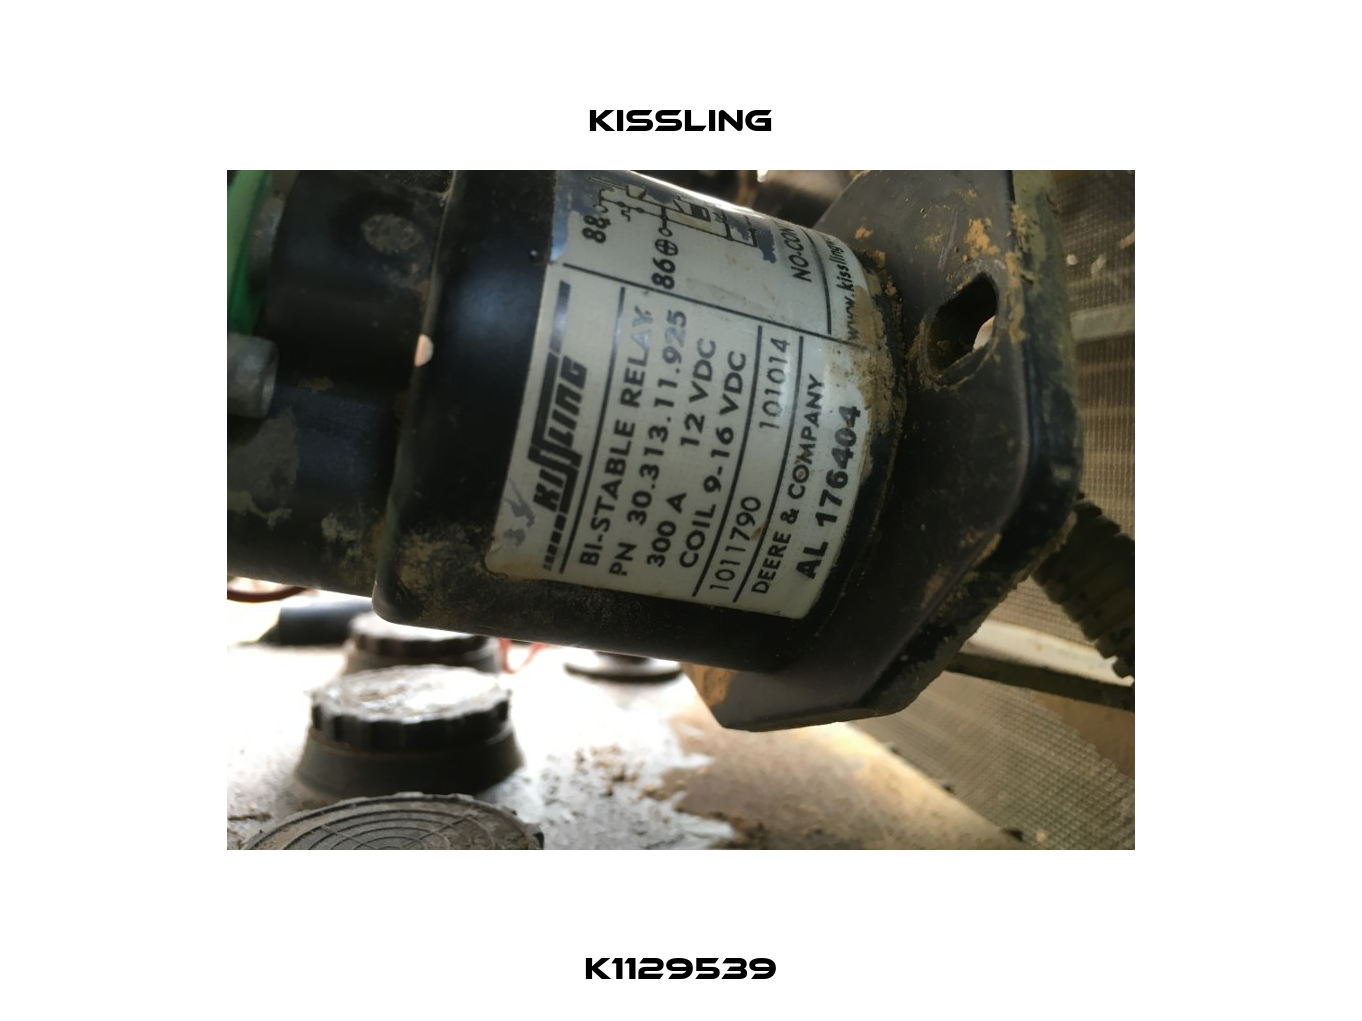 K1129539 Kissling